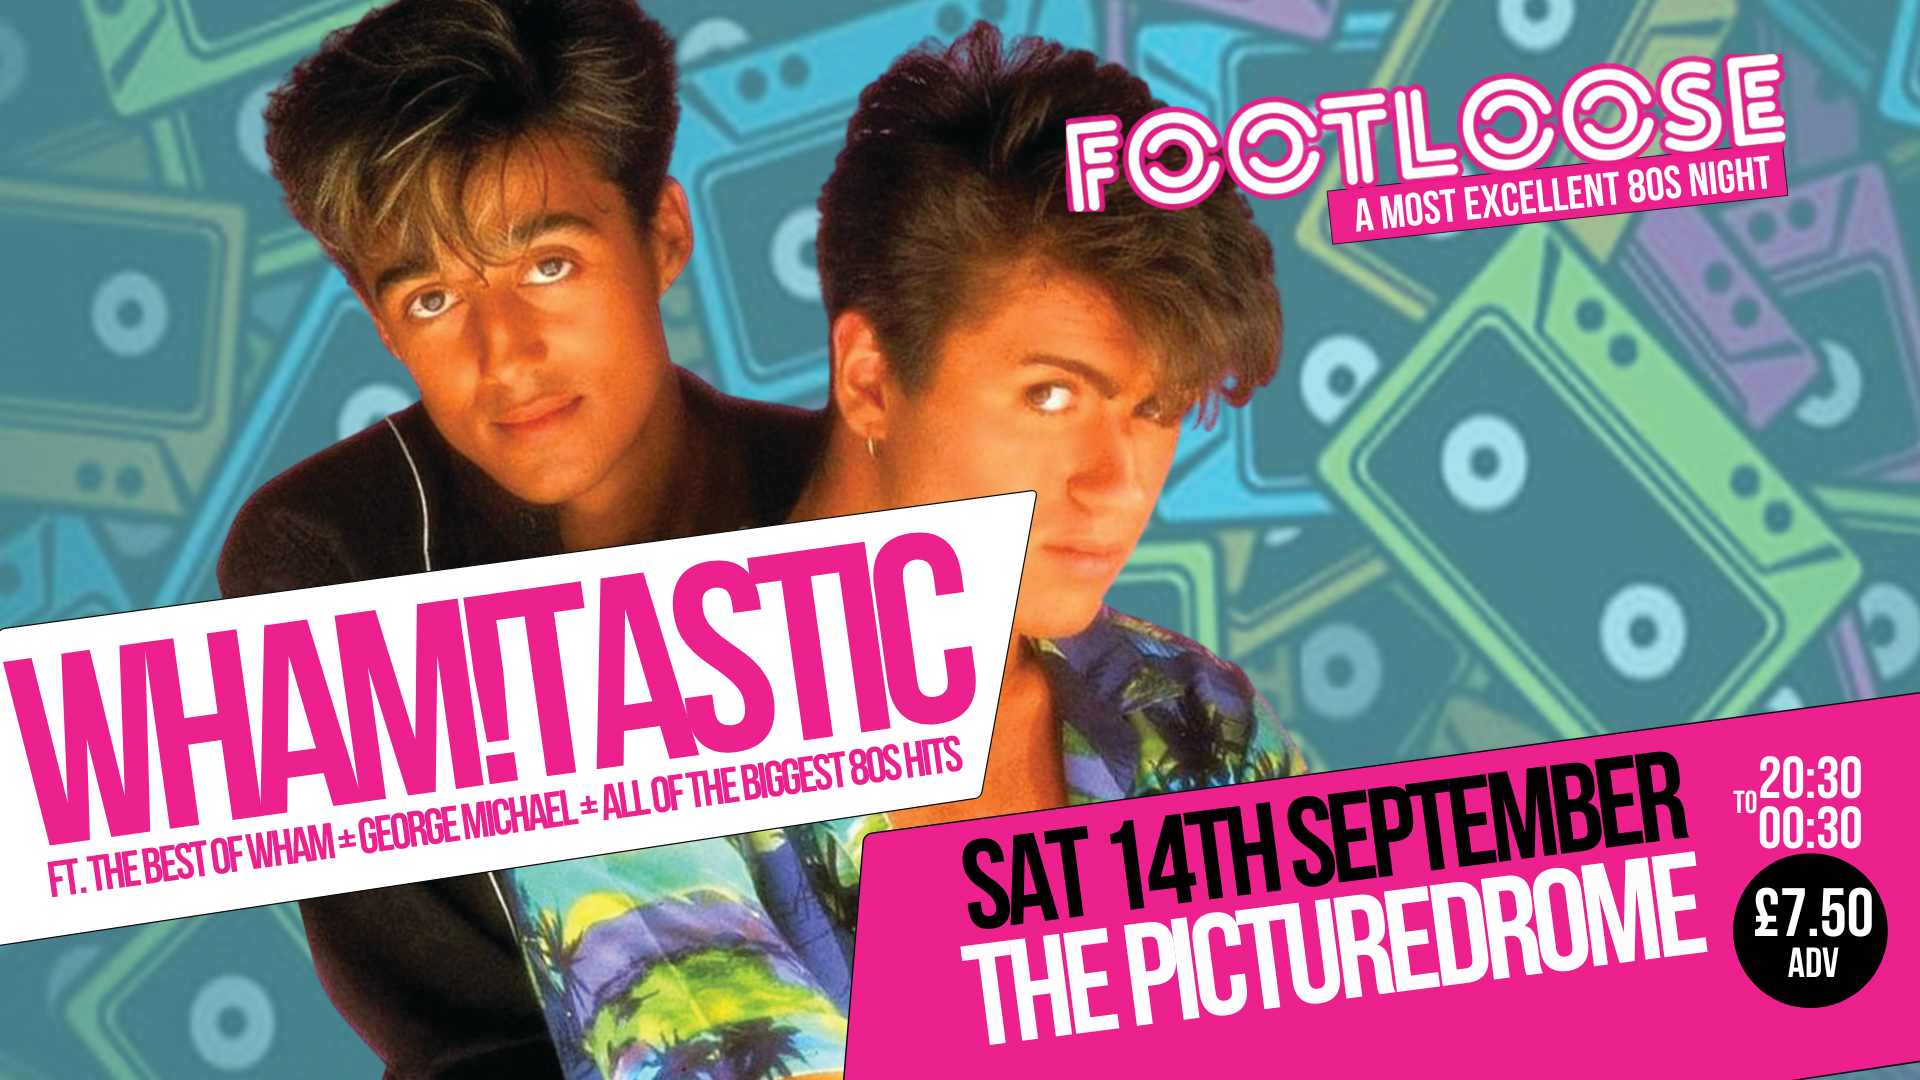 Footloose 80s WHAMTASTIC Special - Northampton